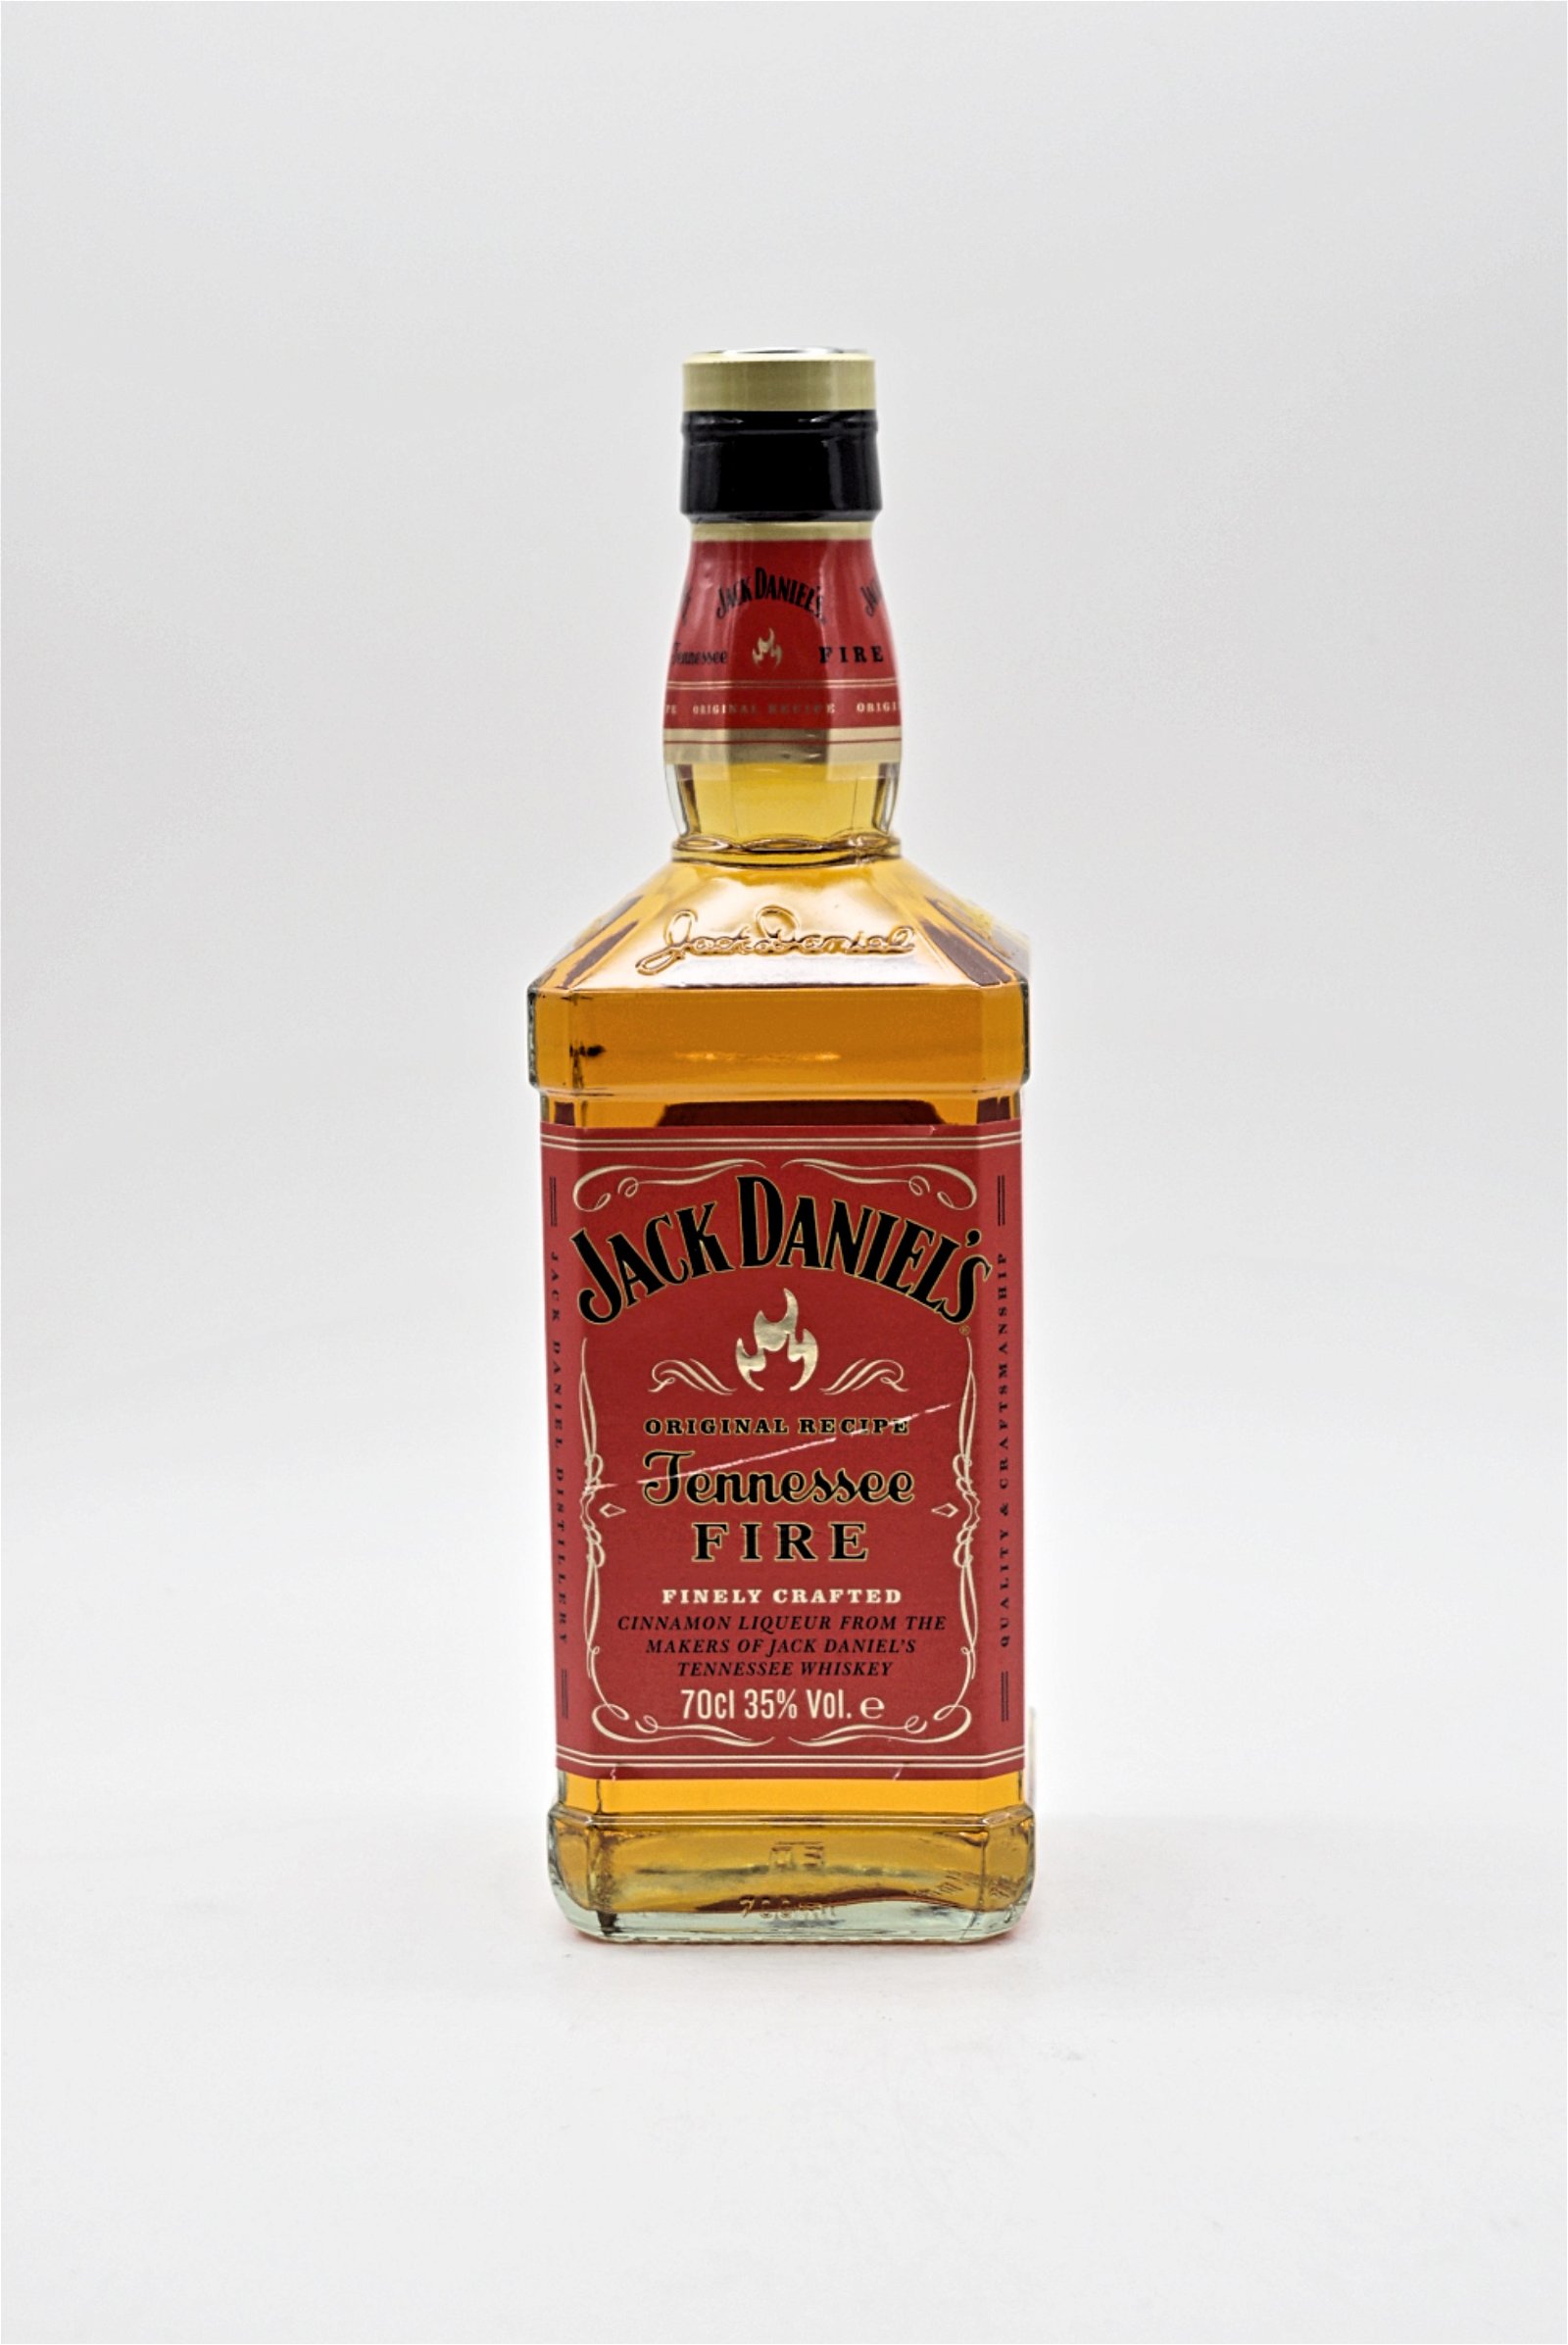 Jack Daniels Tennessee Fire Whiskey